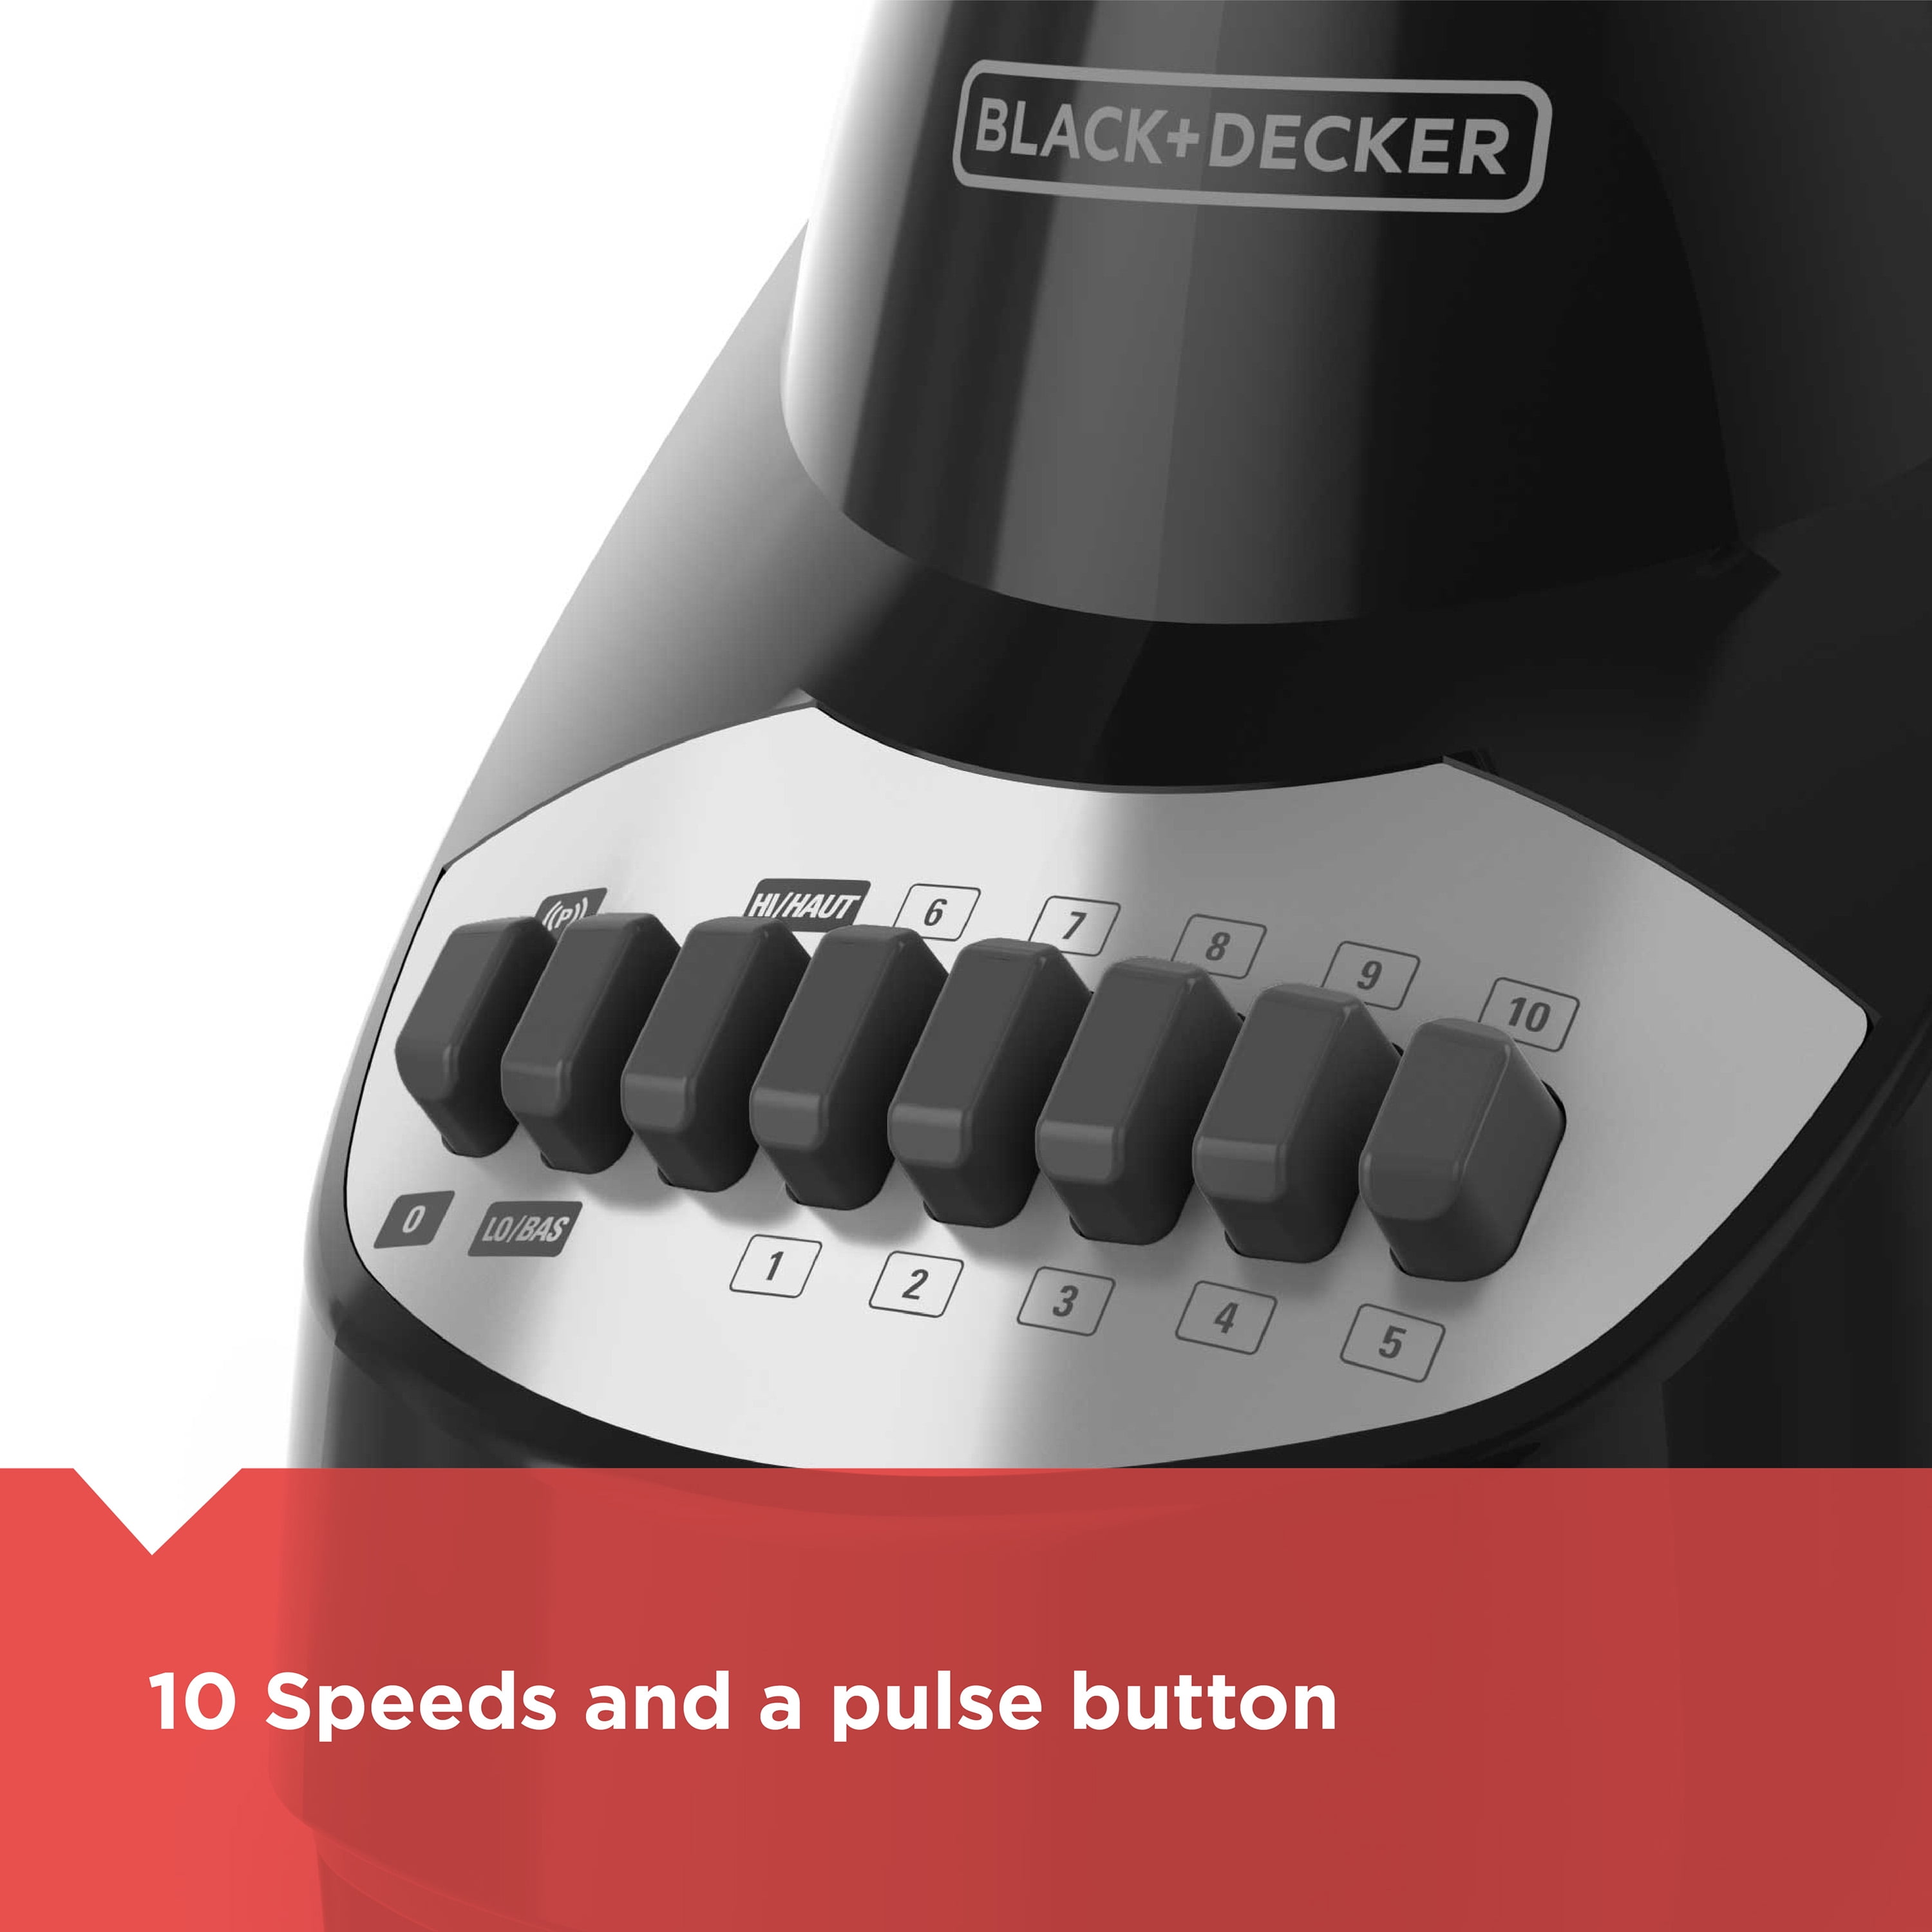 BLACK+DECKER BL2010 10-Speed Standard Blender - Black